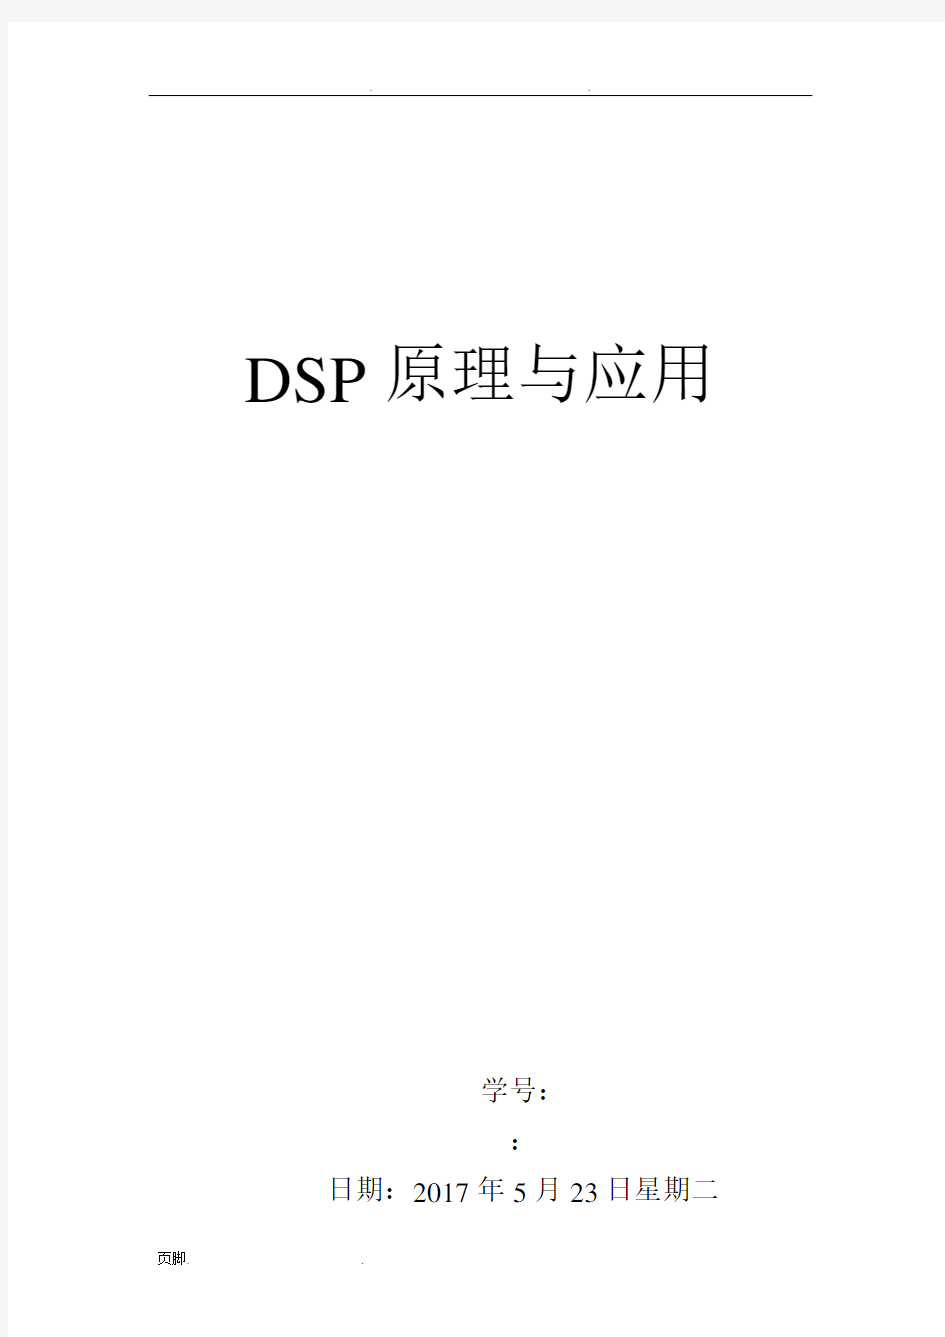 DSP大作业(哈工程)